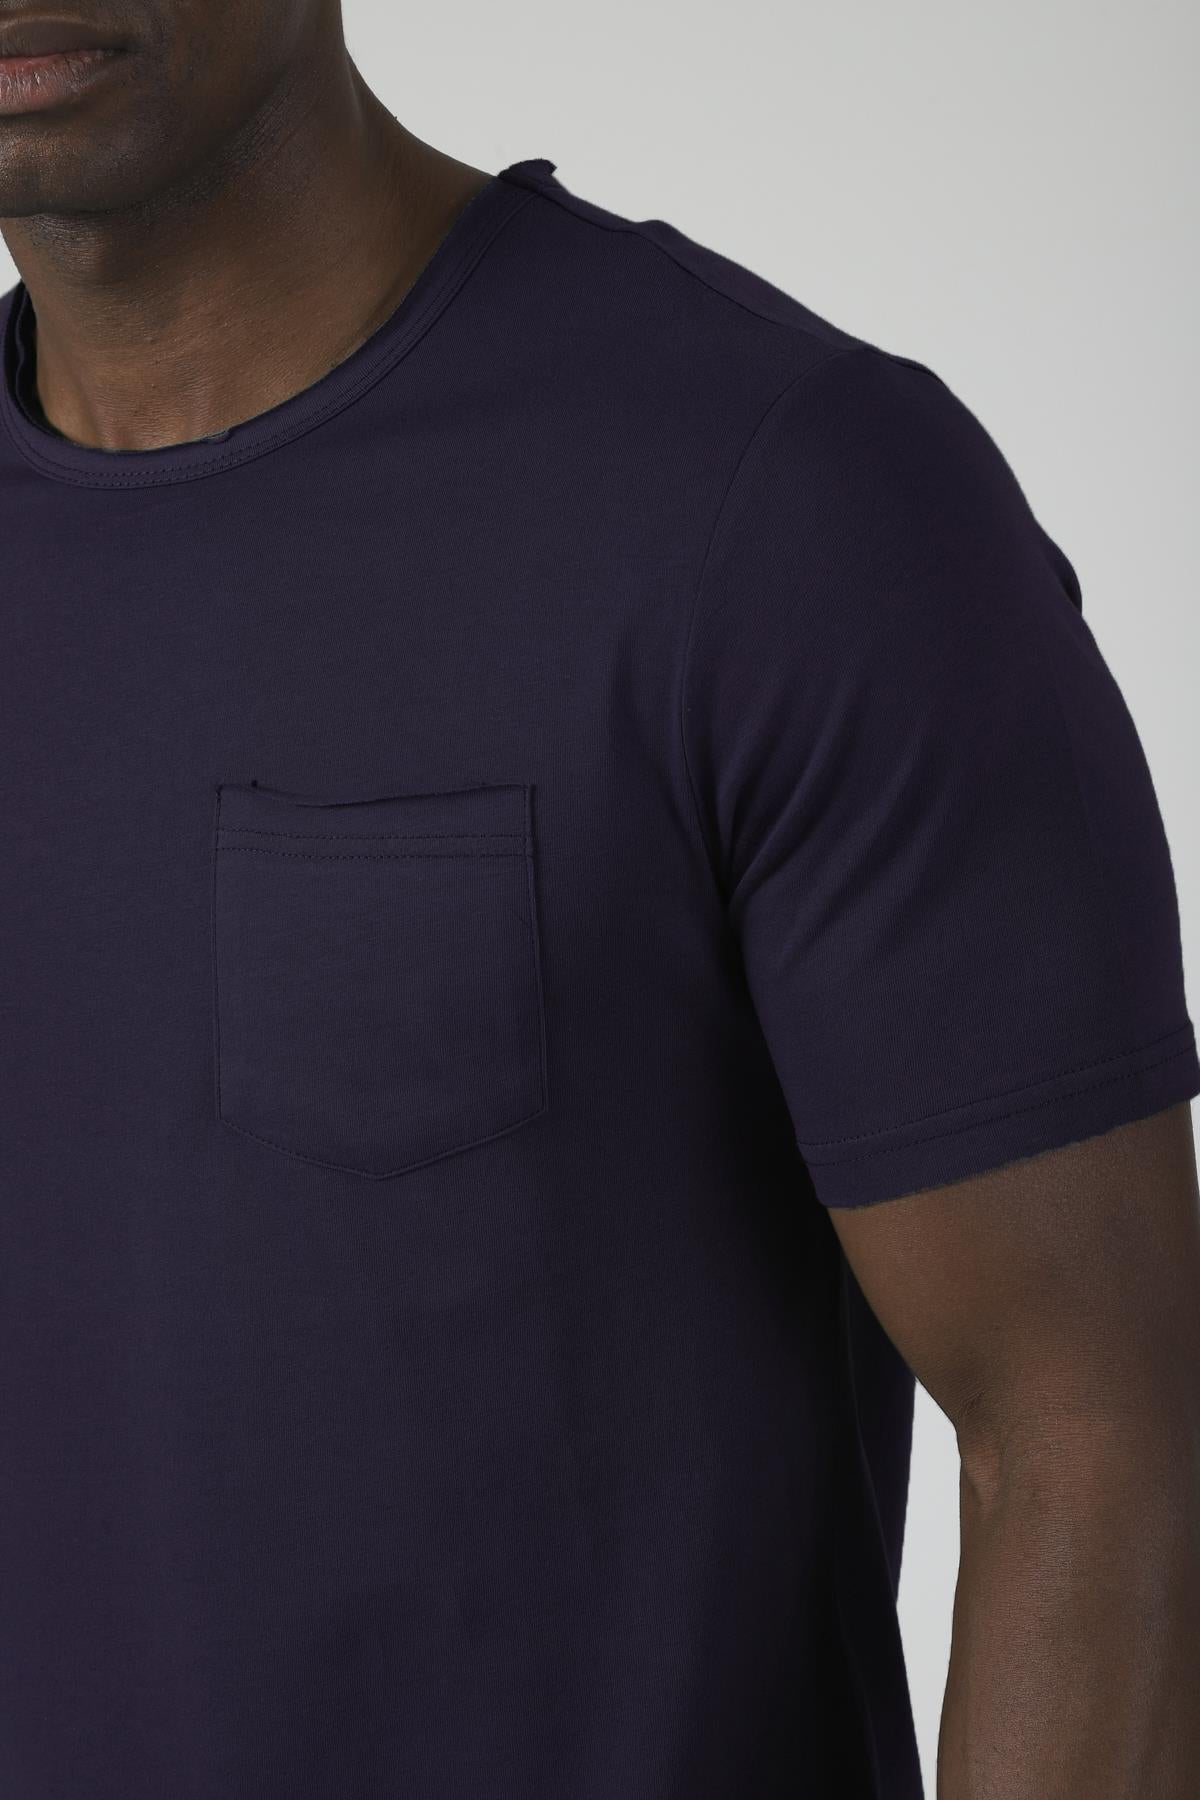 Single pocket detail dirty sewing Crew Neck men's t -shirt